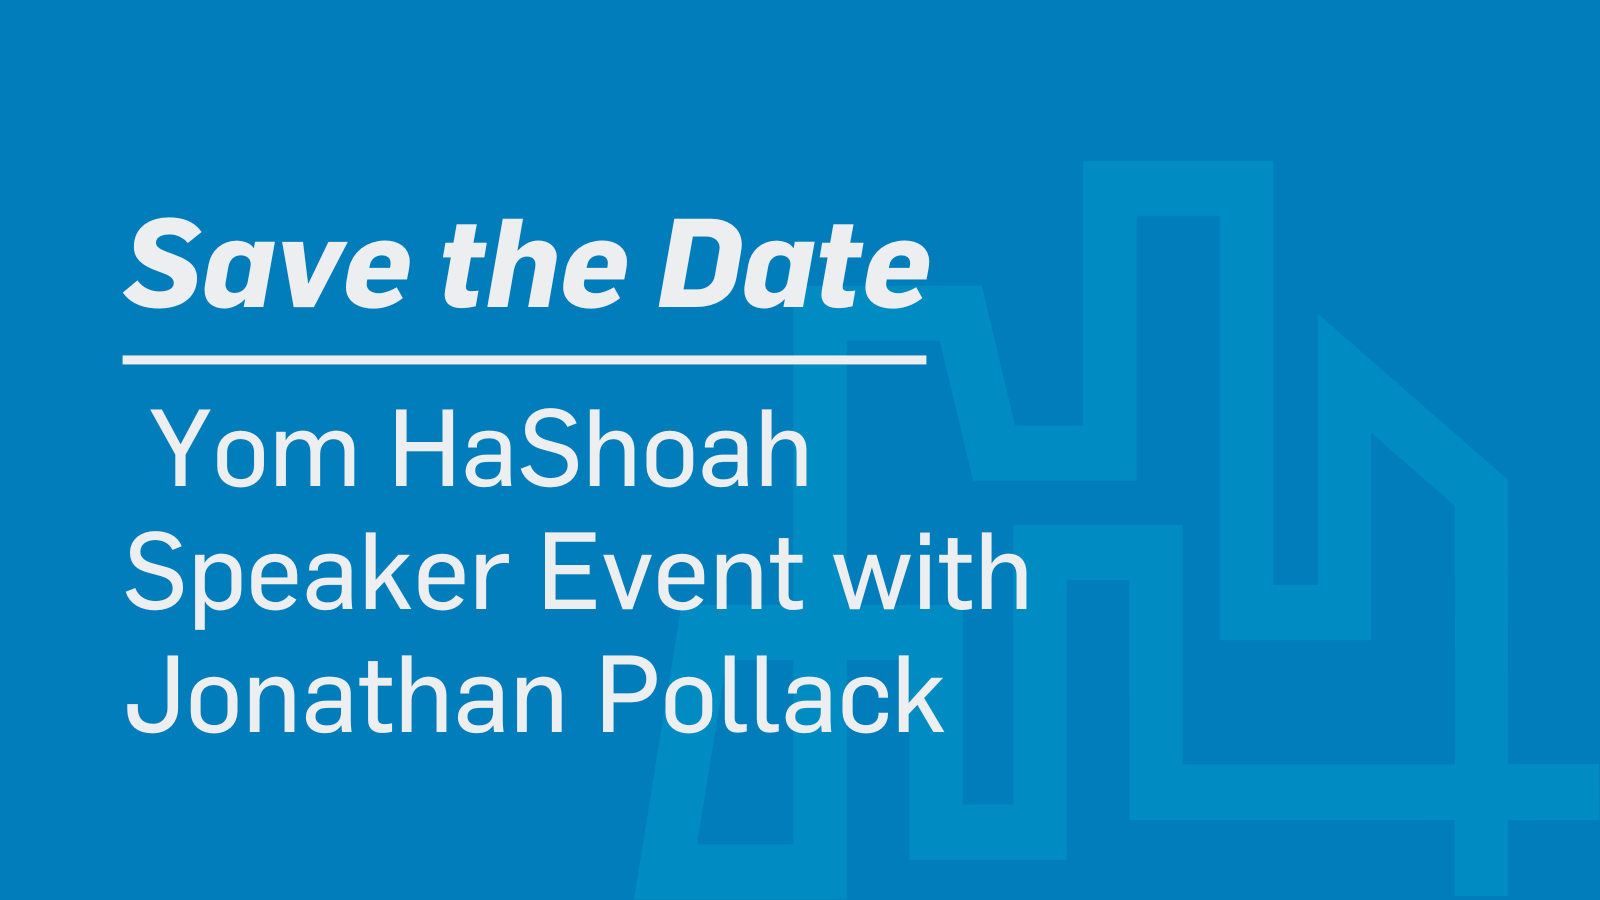 Yom HaShoah Speaker Event with Jonathan Pollack